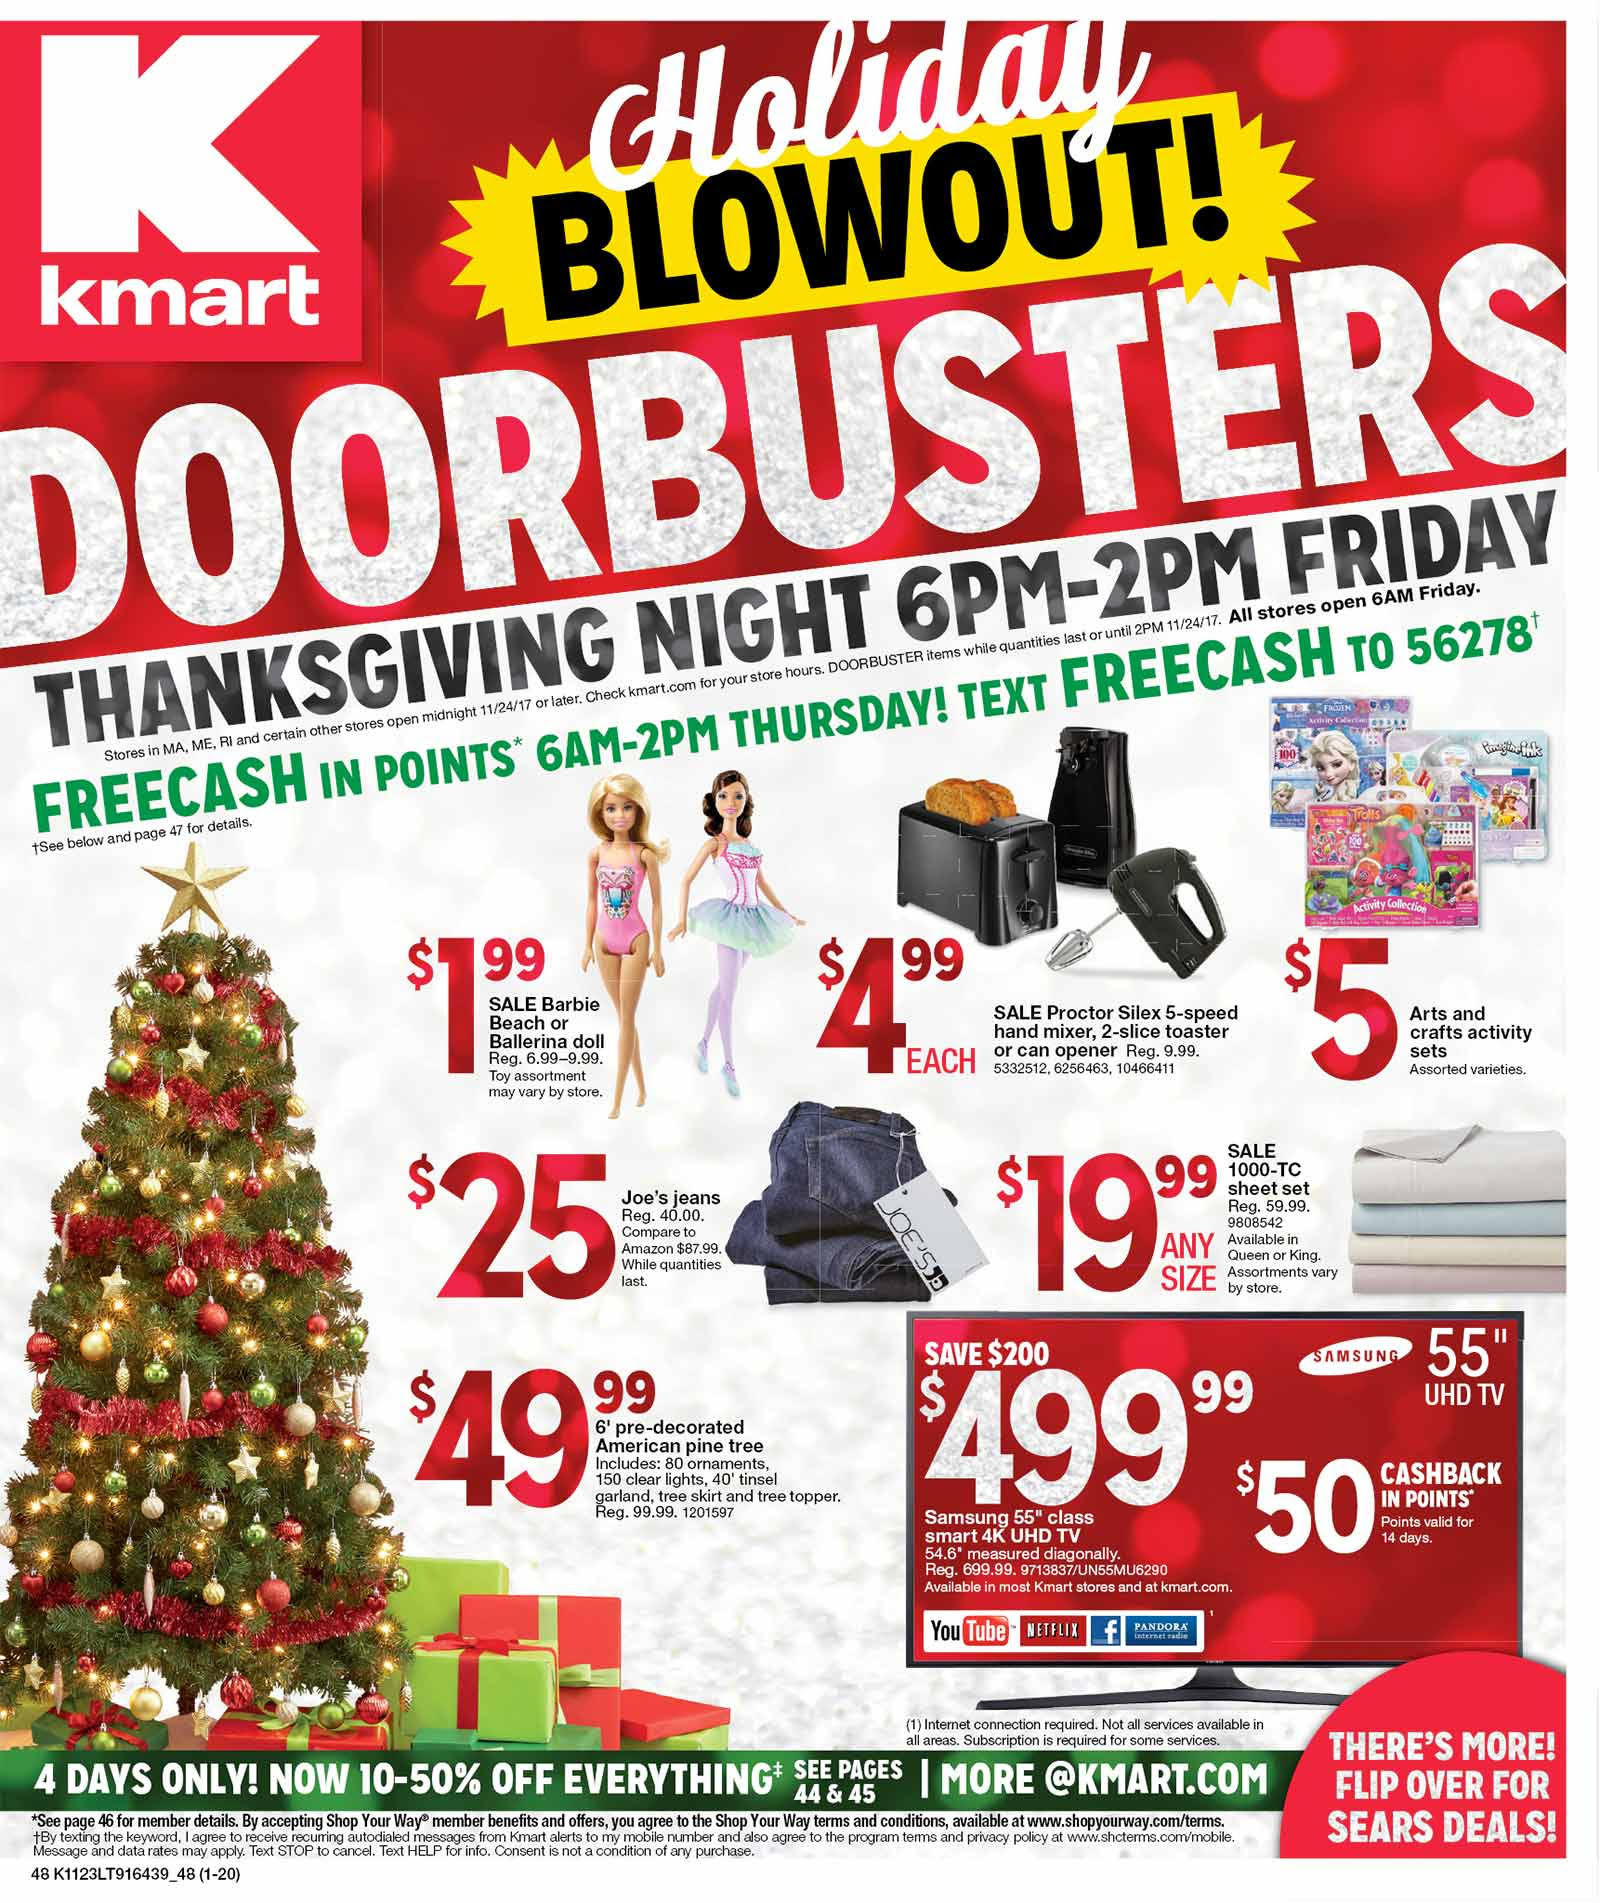 Kmart Black Friday 2017 ad leak: TV deals and more in store for Black Friday – BGR